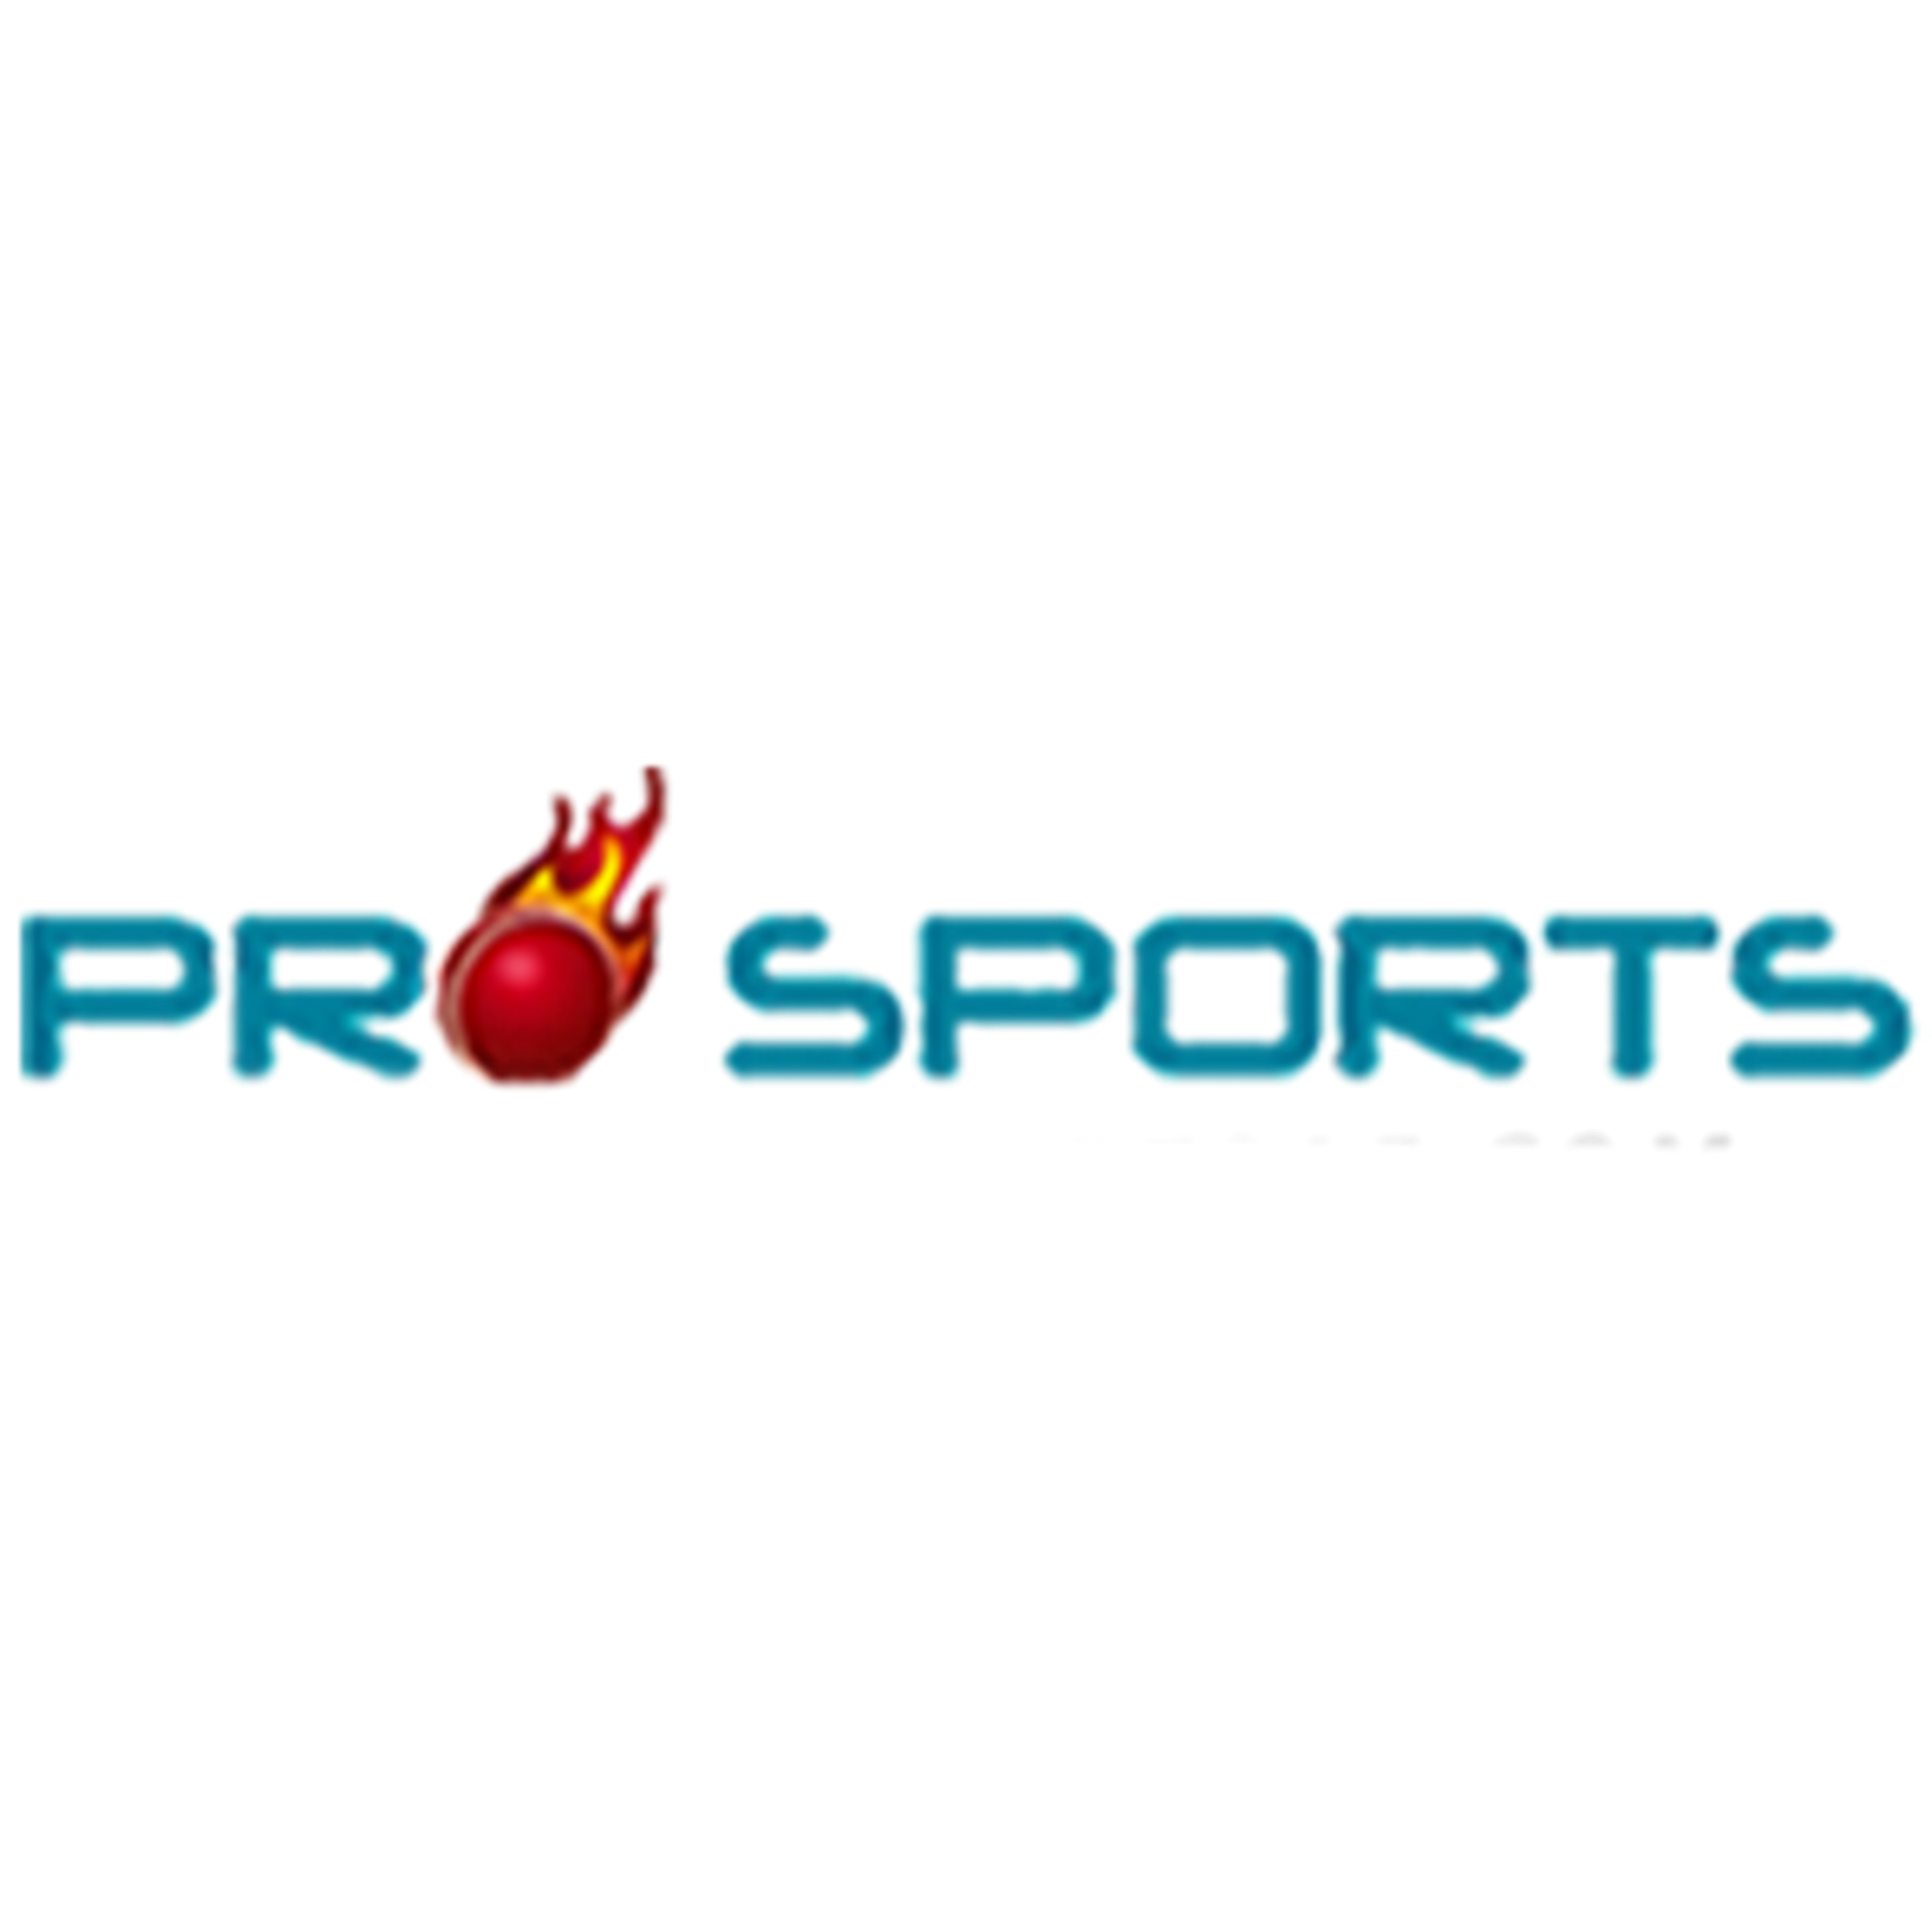 Prosportsae.com Brand Logo